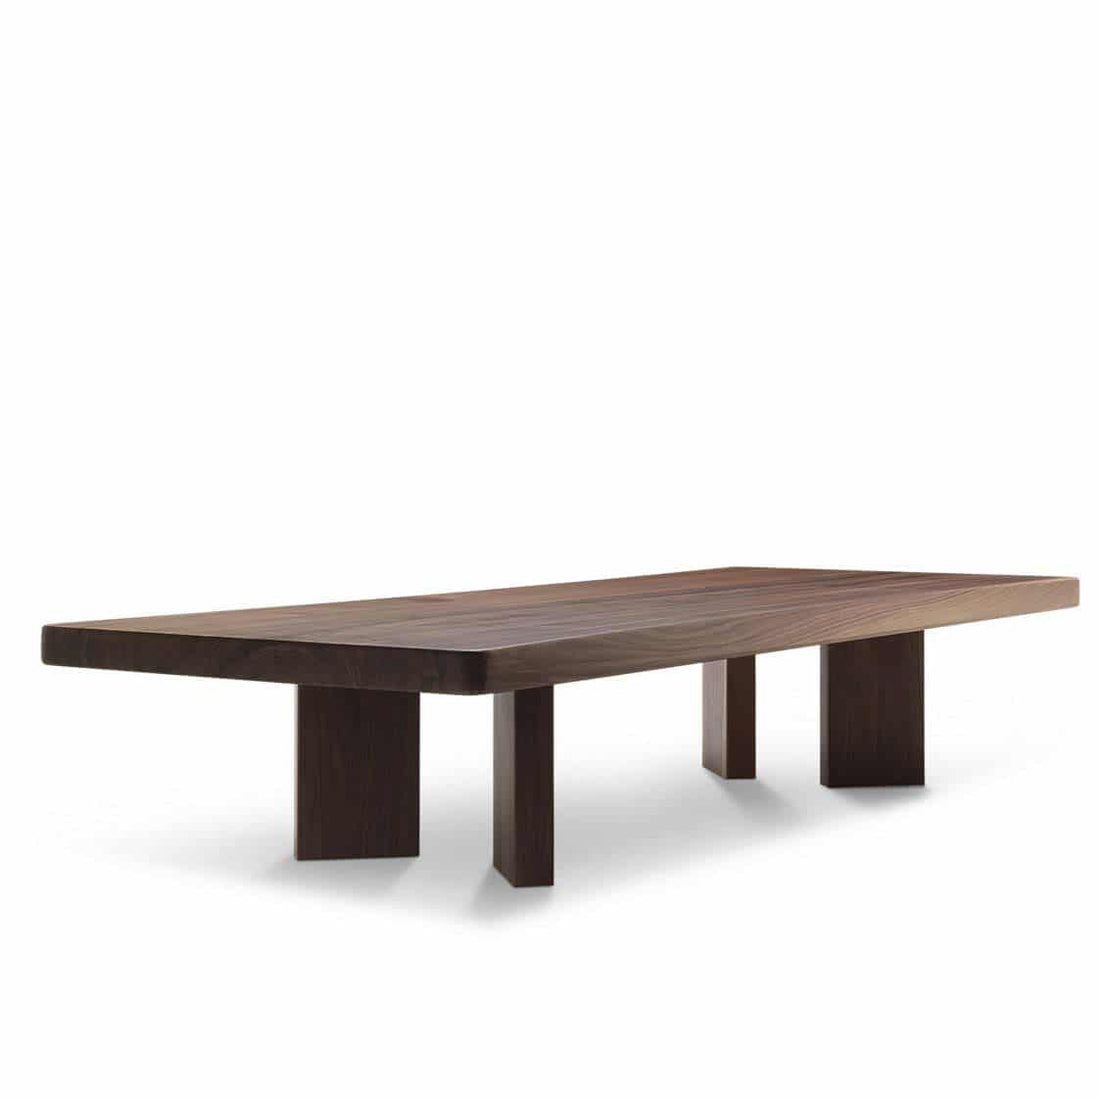 Plana table